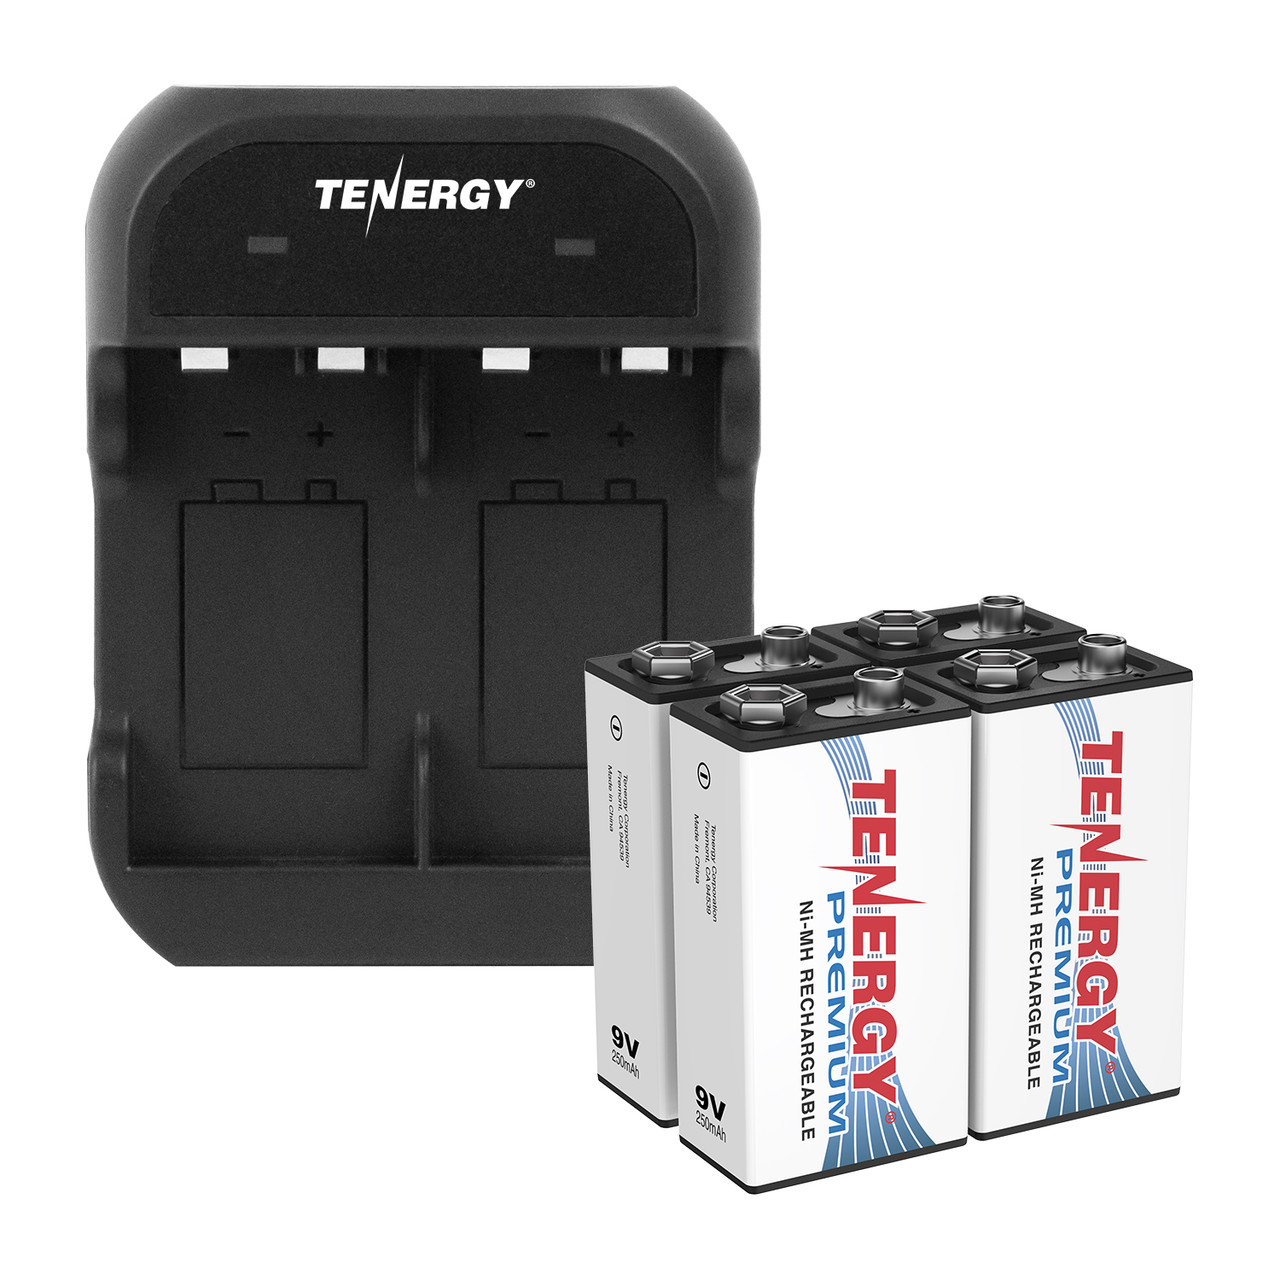 Combo: Tenergy TN141 2-bay 9V Charger + 4pcs Premium 9V 250mAh NiMH Rechargeable Batteries